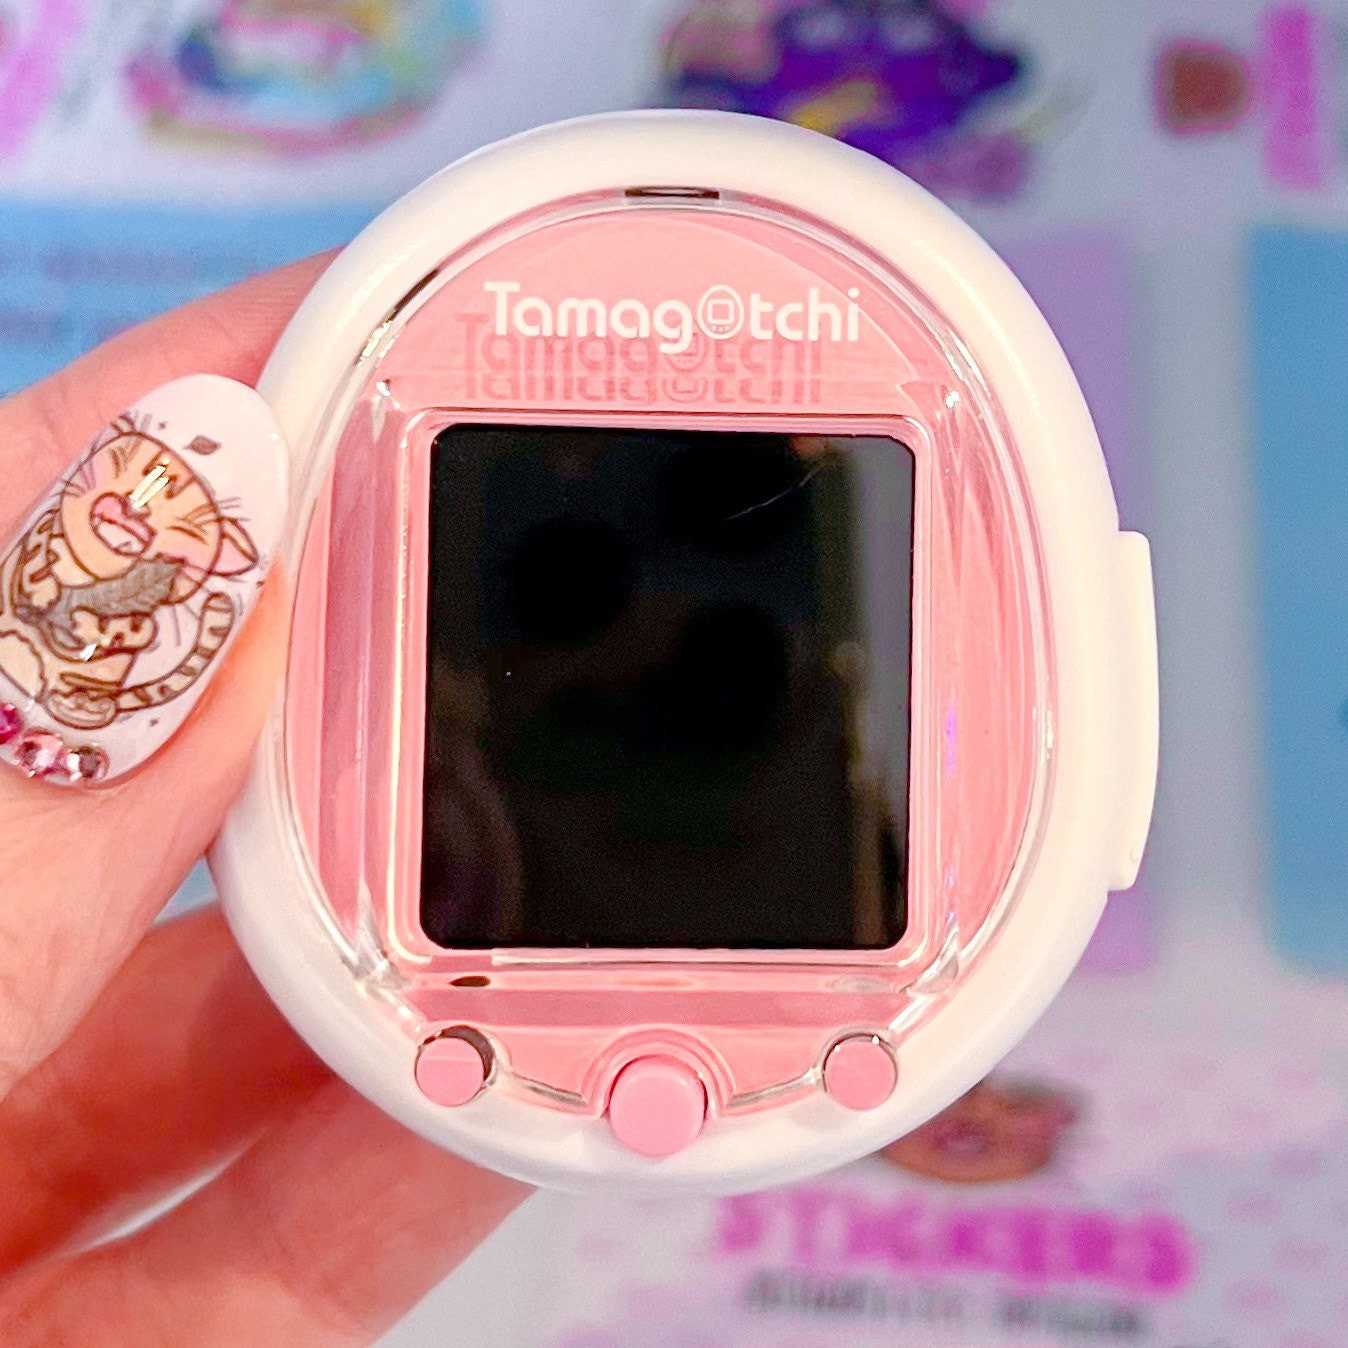 Tamagotchi Smart Watch Faceplates - Pastel Pink